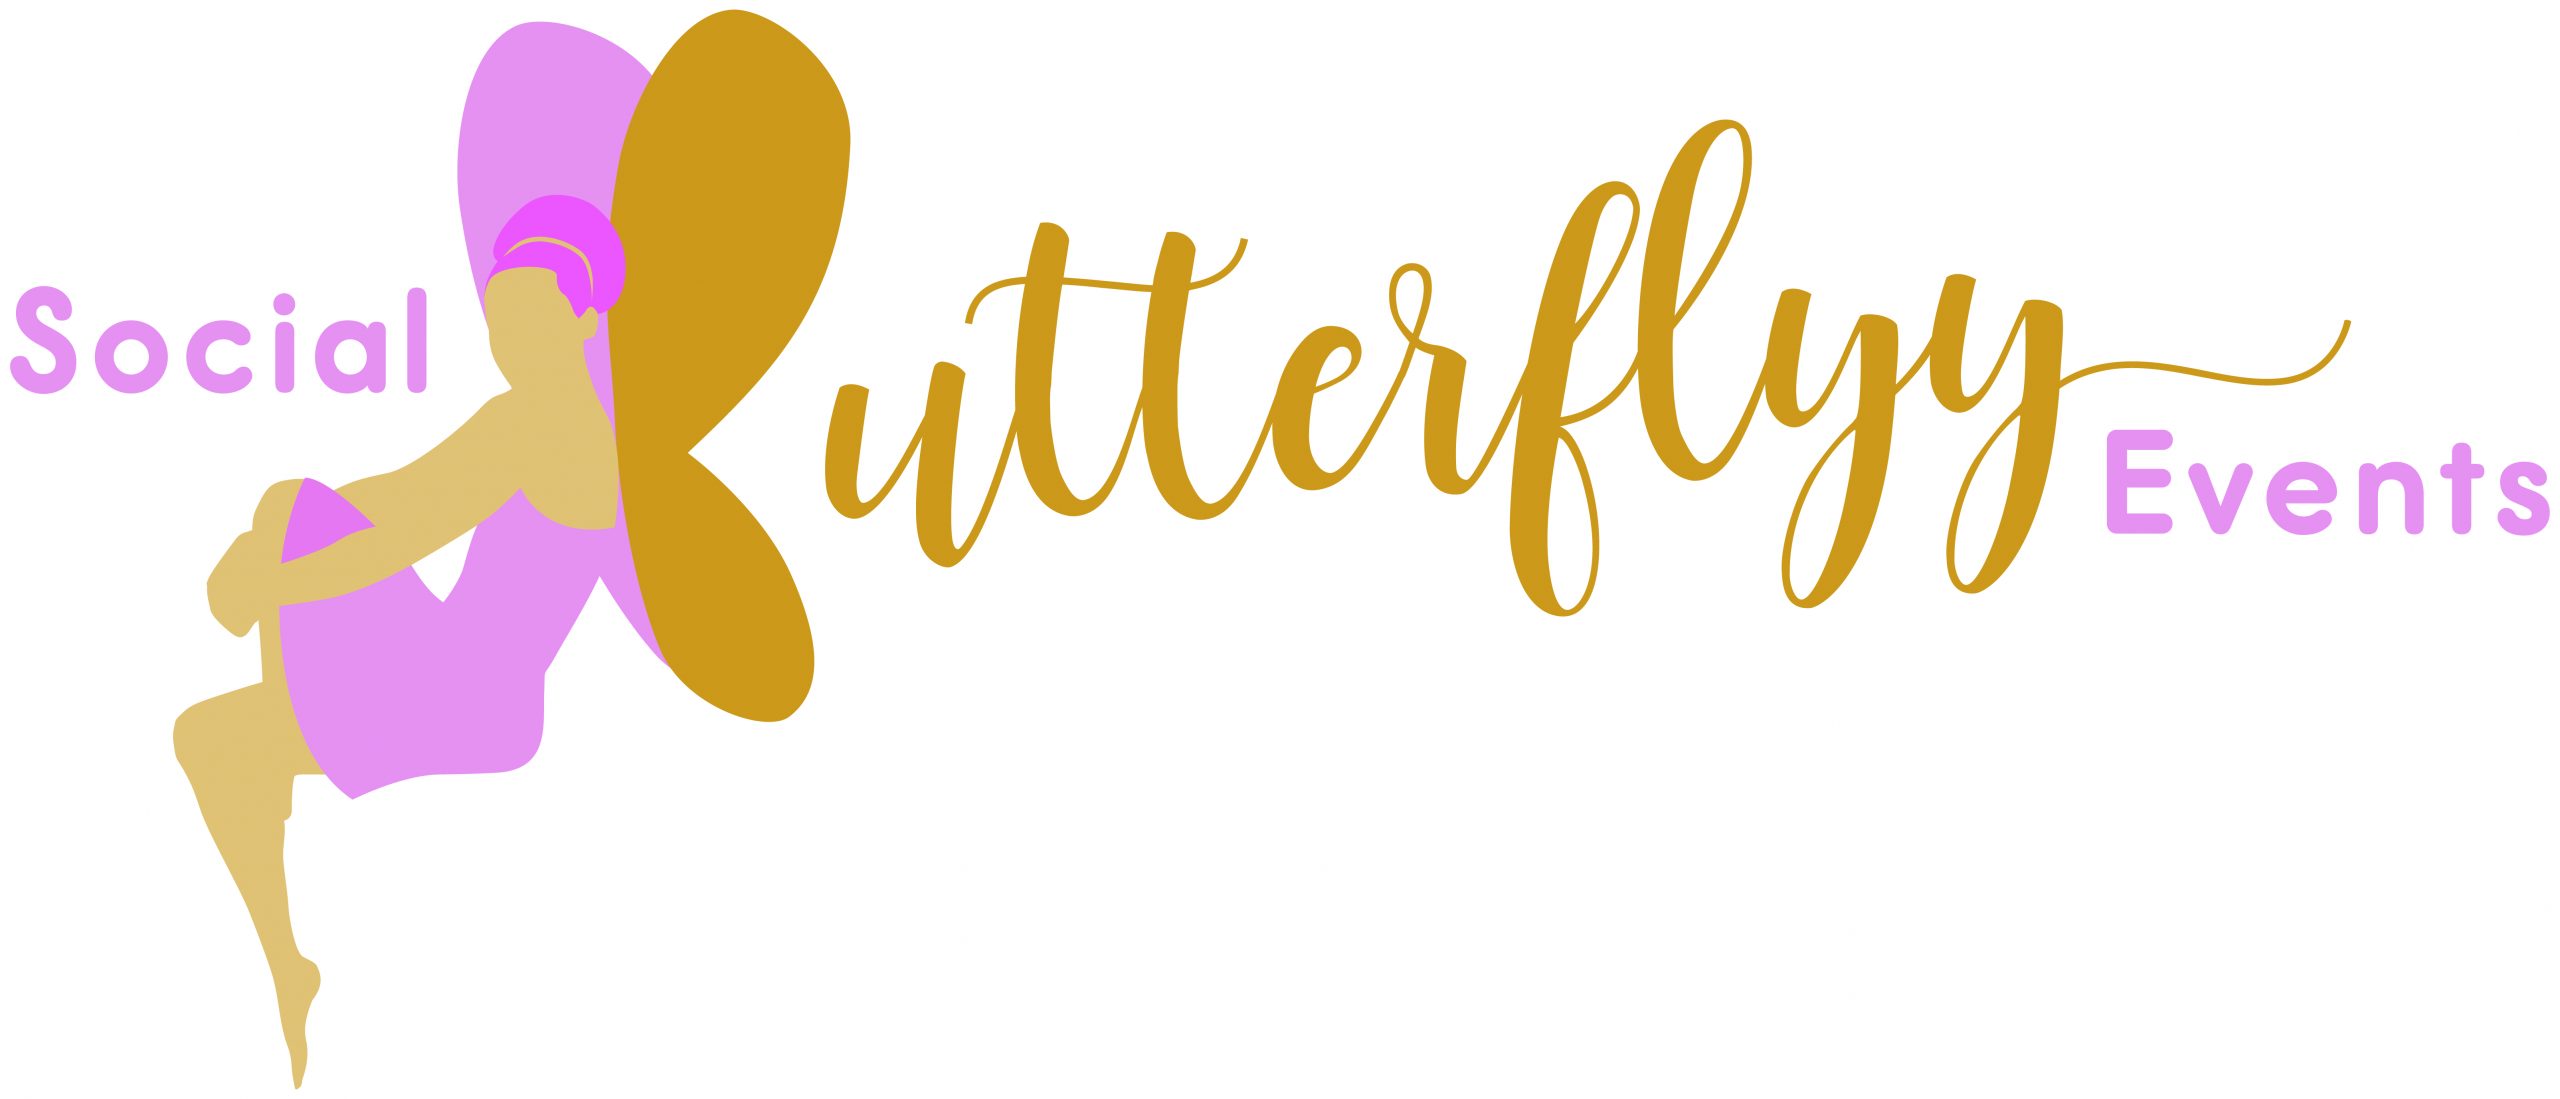 Social Butterflyy Events